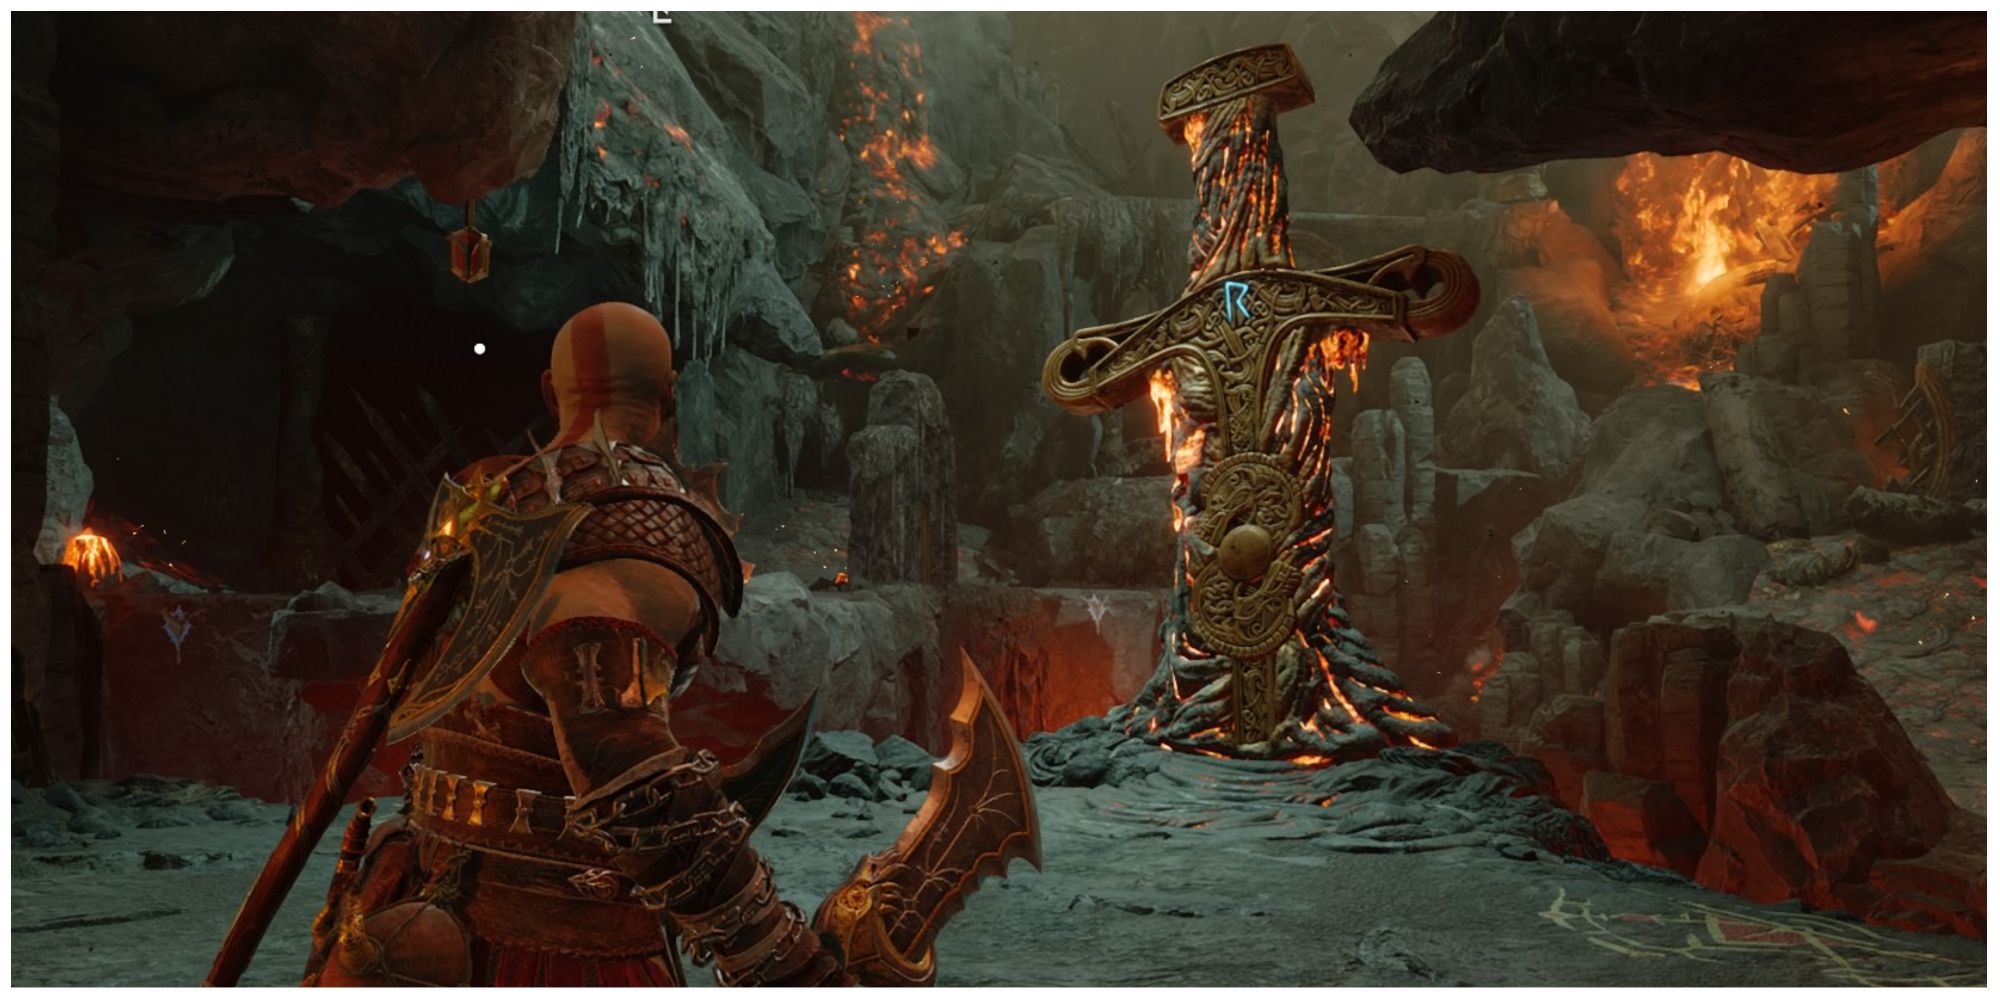 Kratos faces a Muspelheim Challenge in God of War Ragnarok